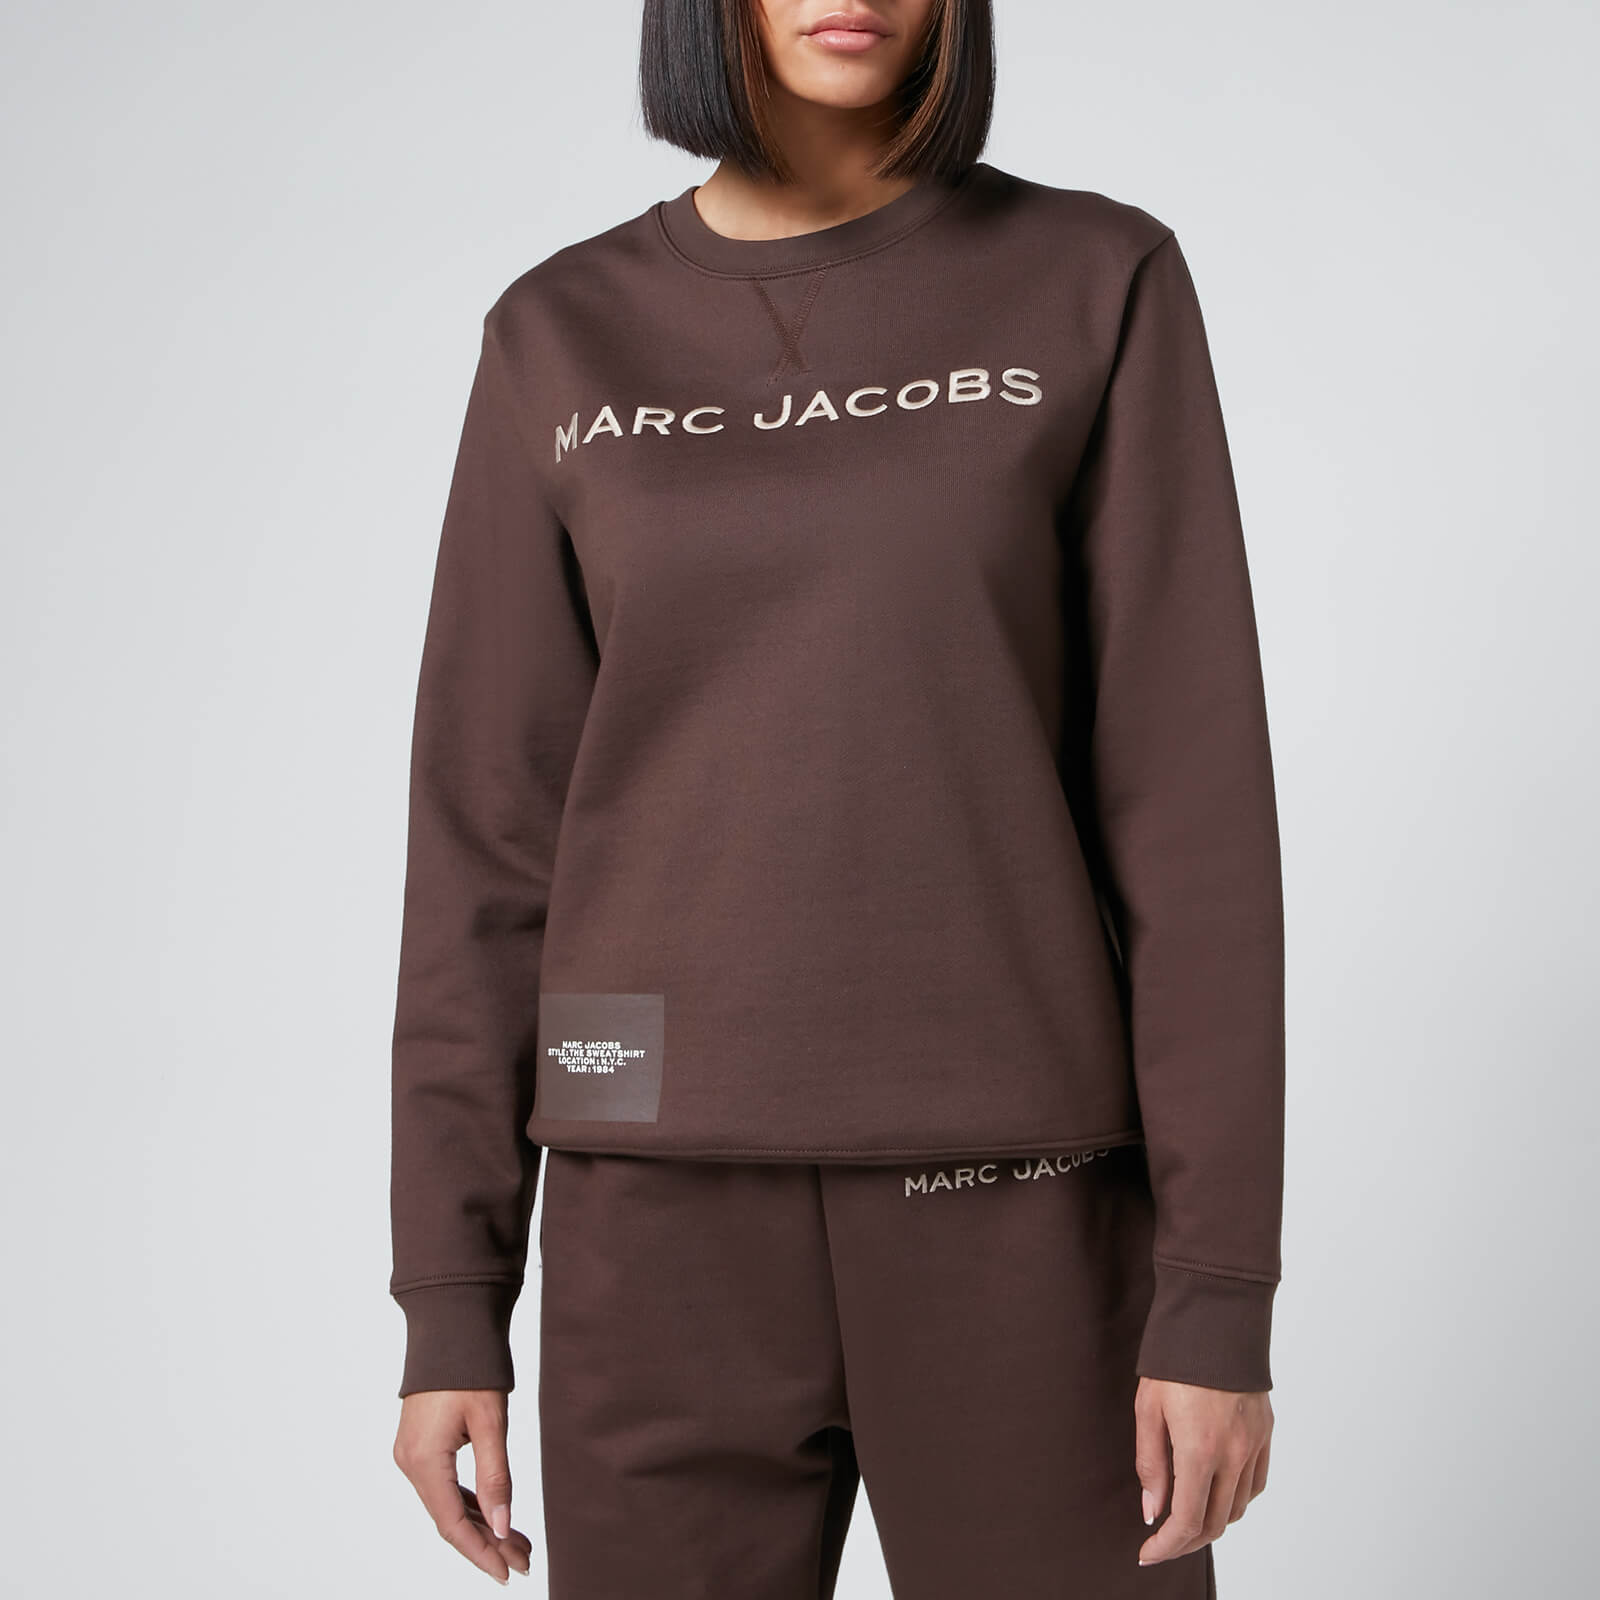 Marc Jacobs Women's The Sweatshirt - Shaved Chocolate - XS